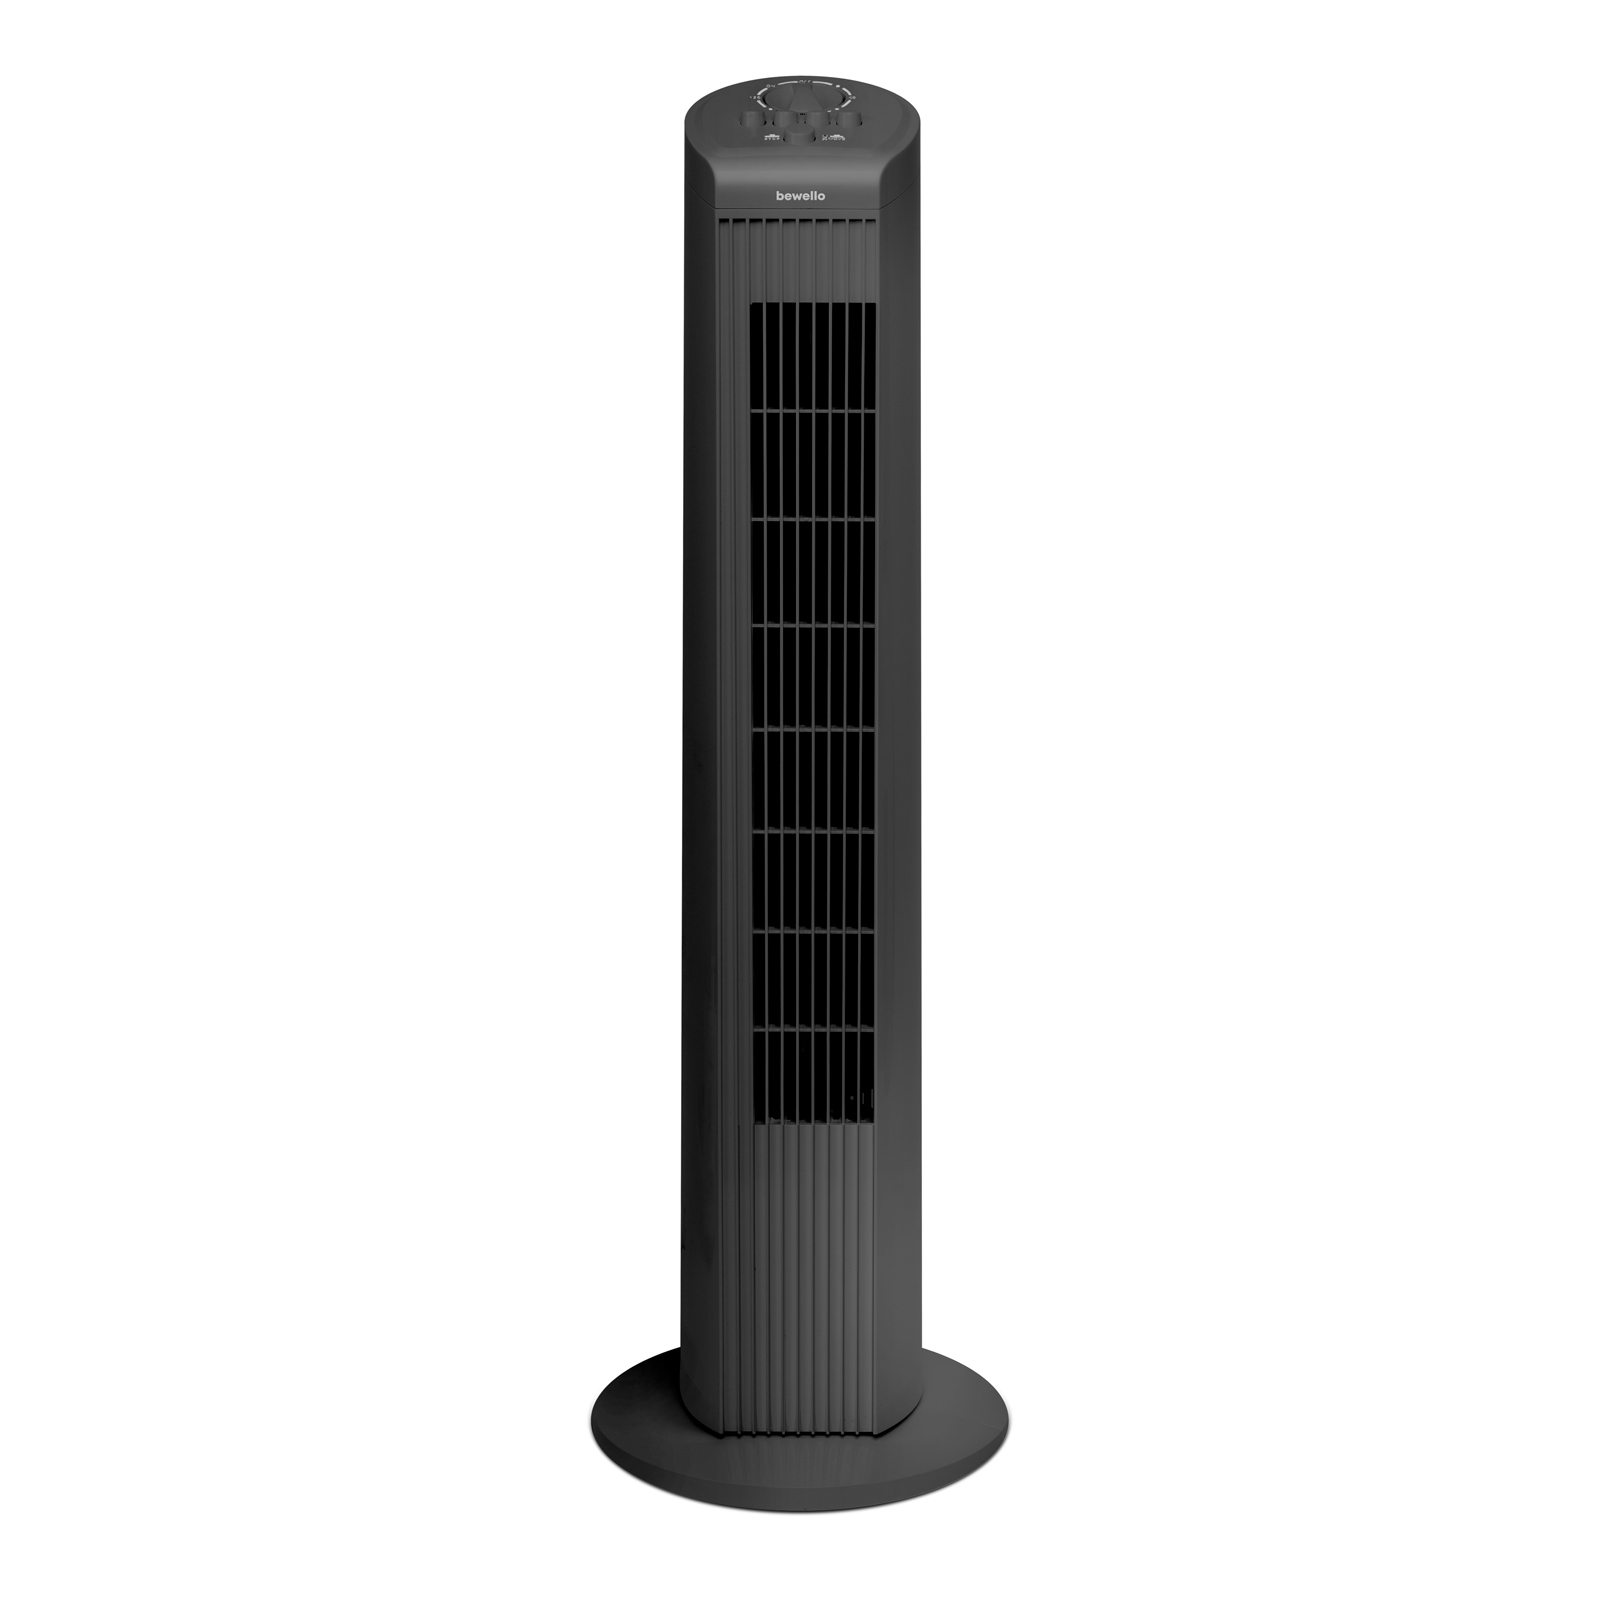 Ventilator coloana - 220-240V, 45 W - negru